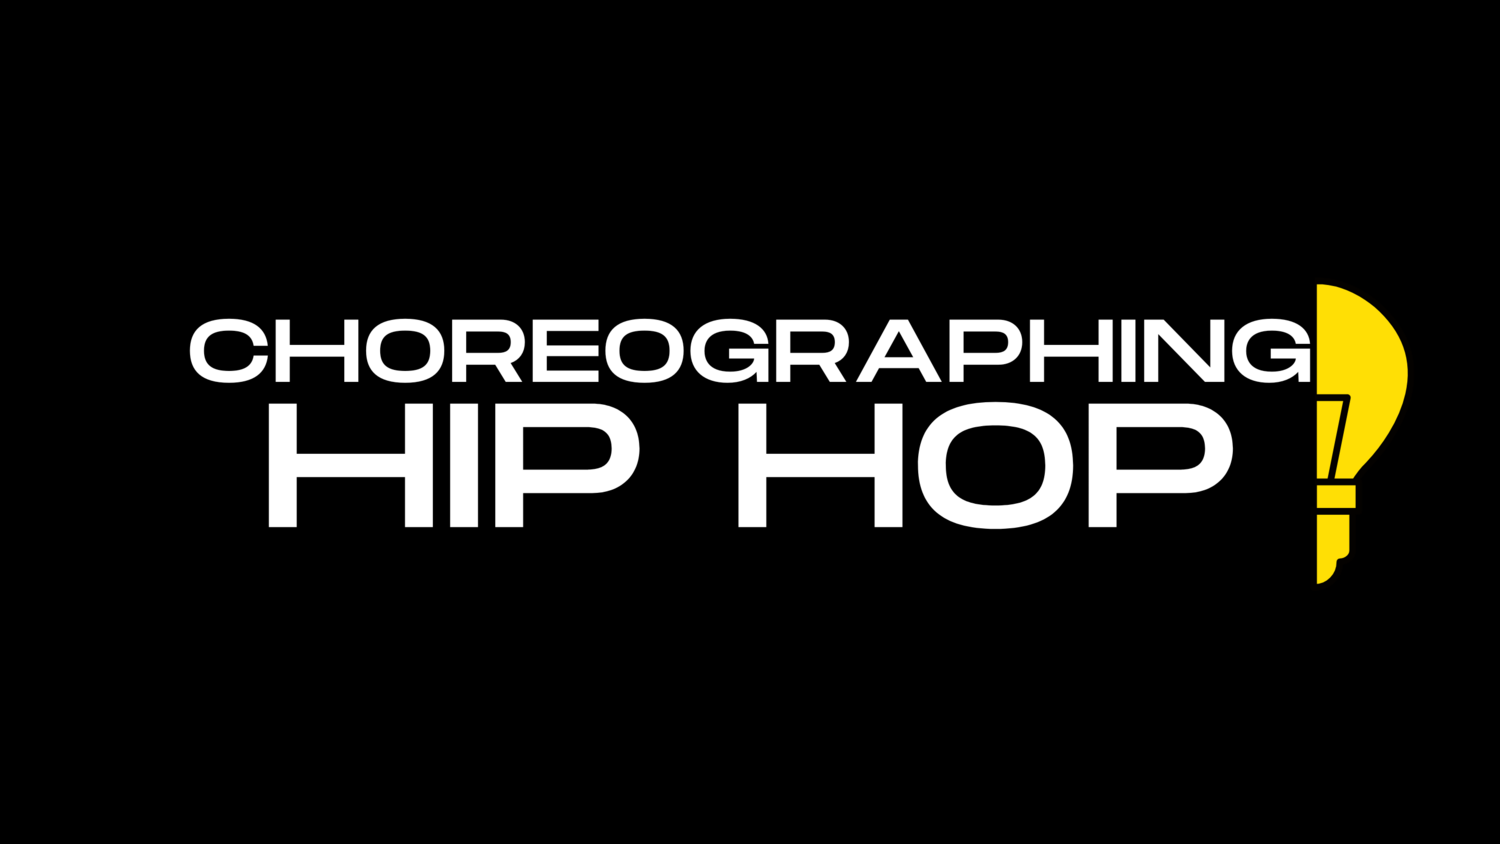 Video: Choreographing Hip Hop